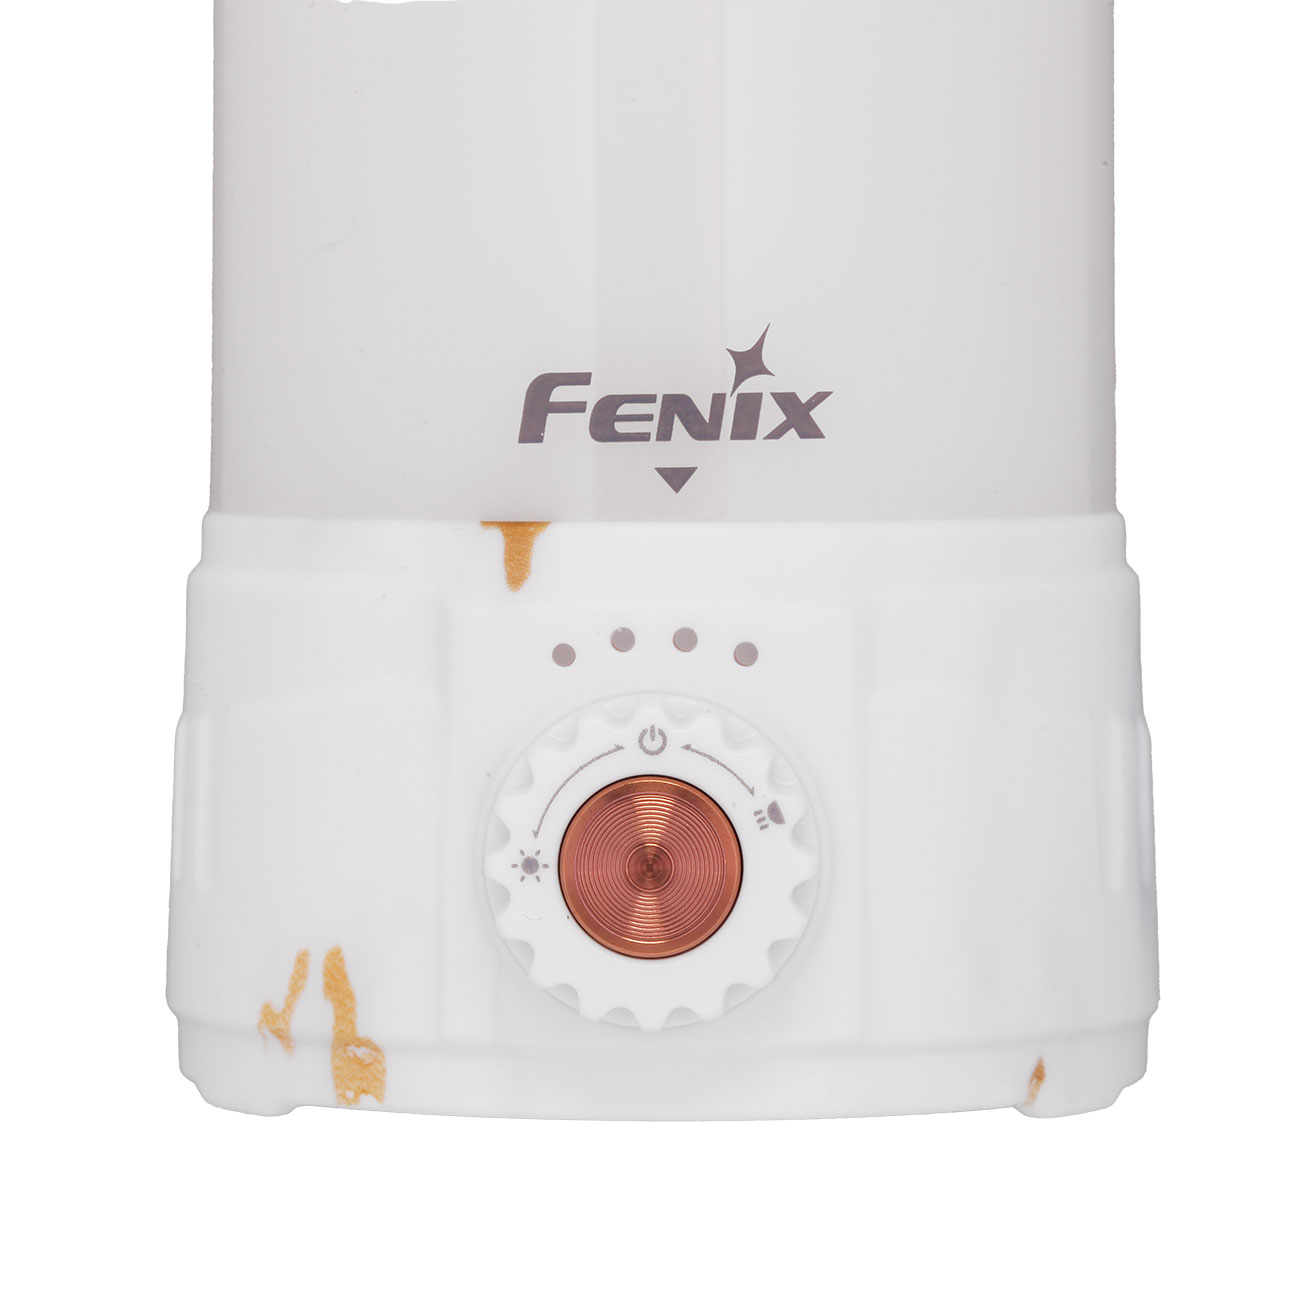 Fenix Campinglaterne CL26R Pro 650 Lumen marmor/wei mit Powerbankfunktion inkl. USB Ladekabel und Akku Bild 3